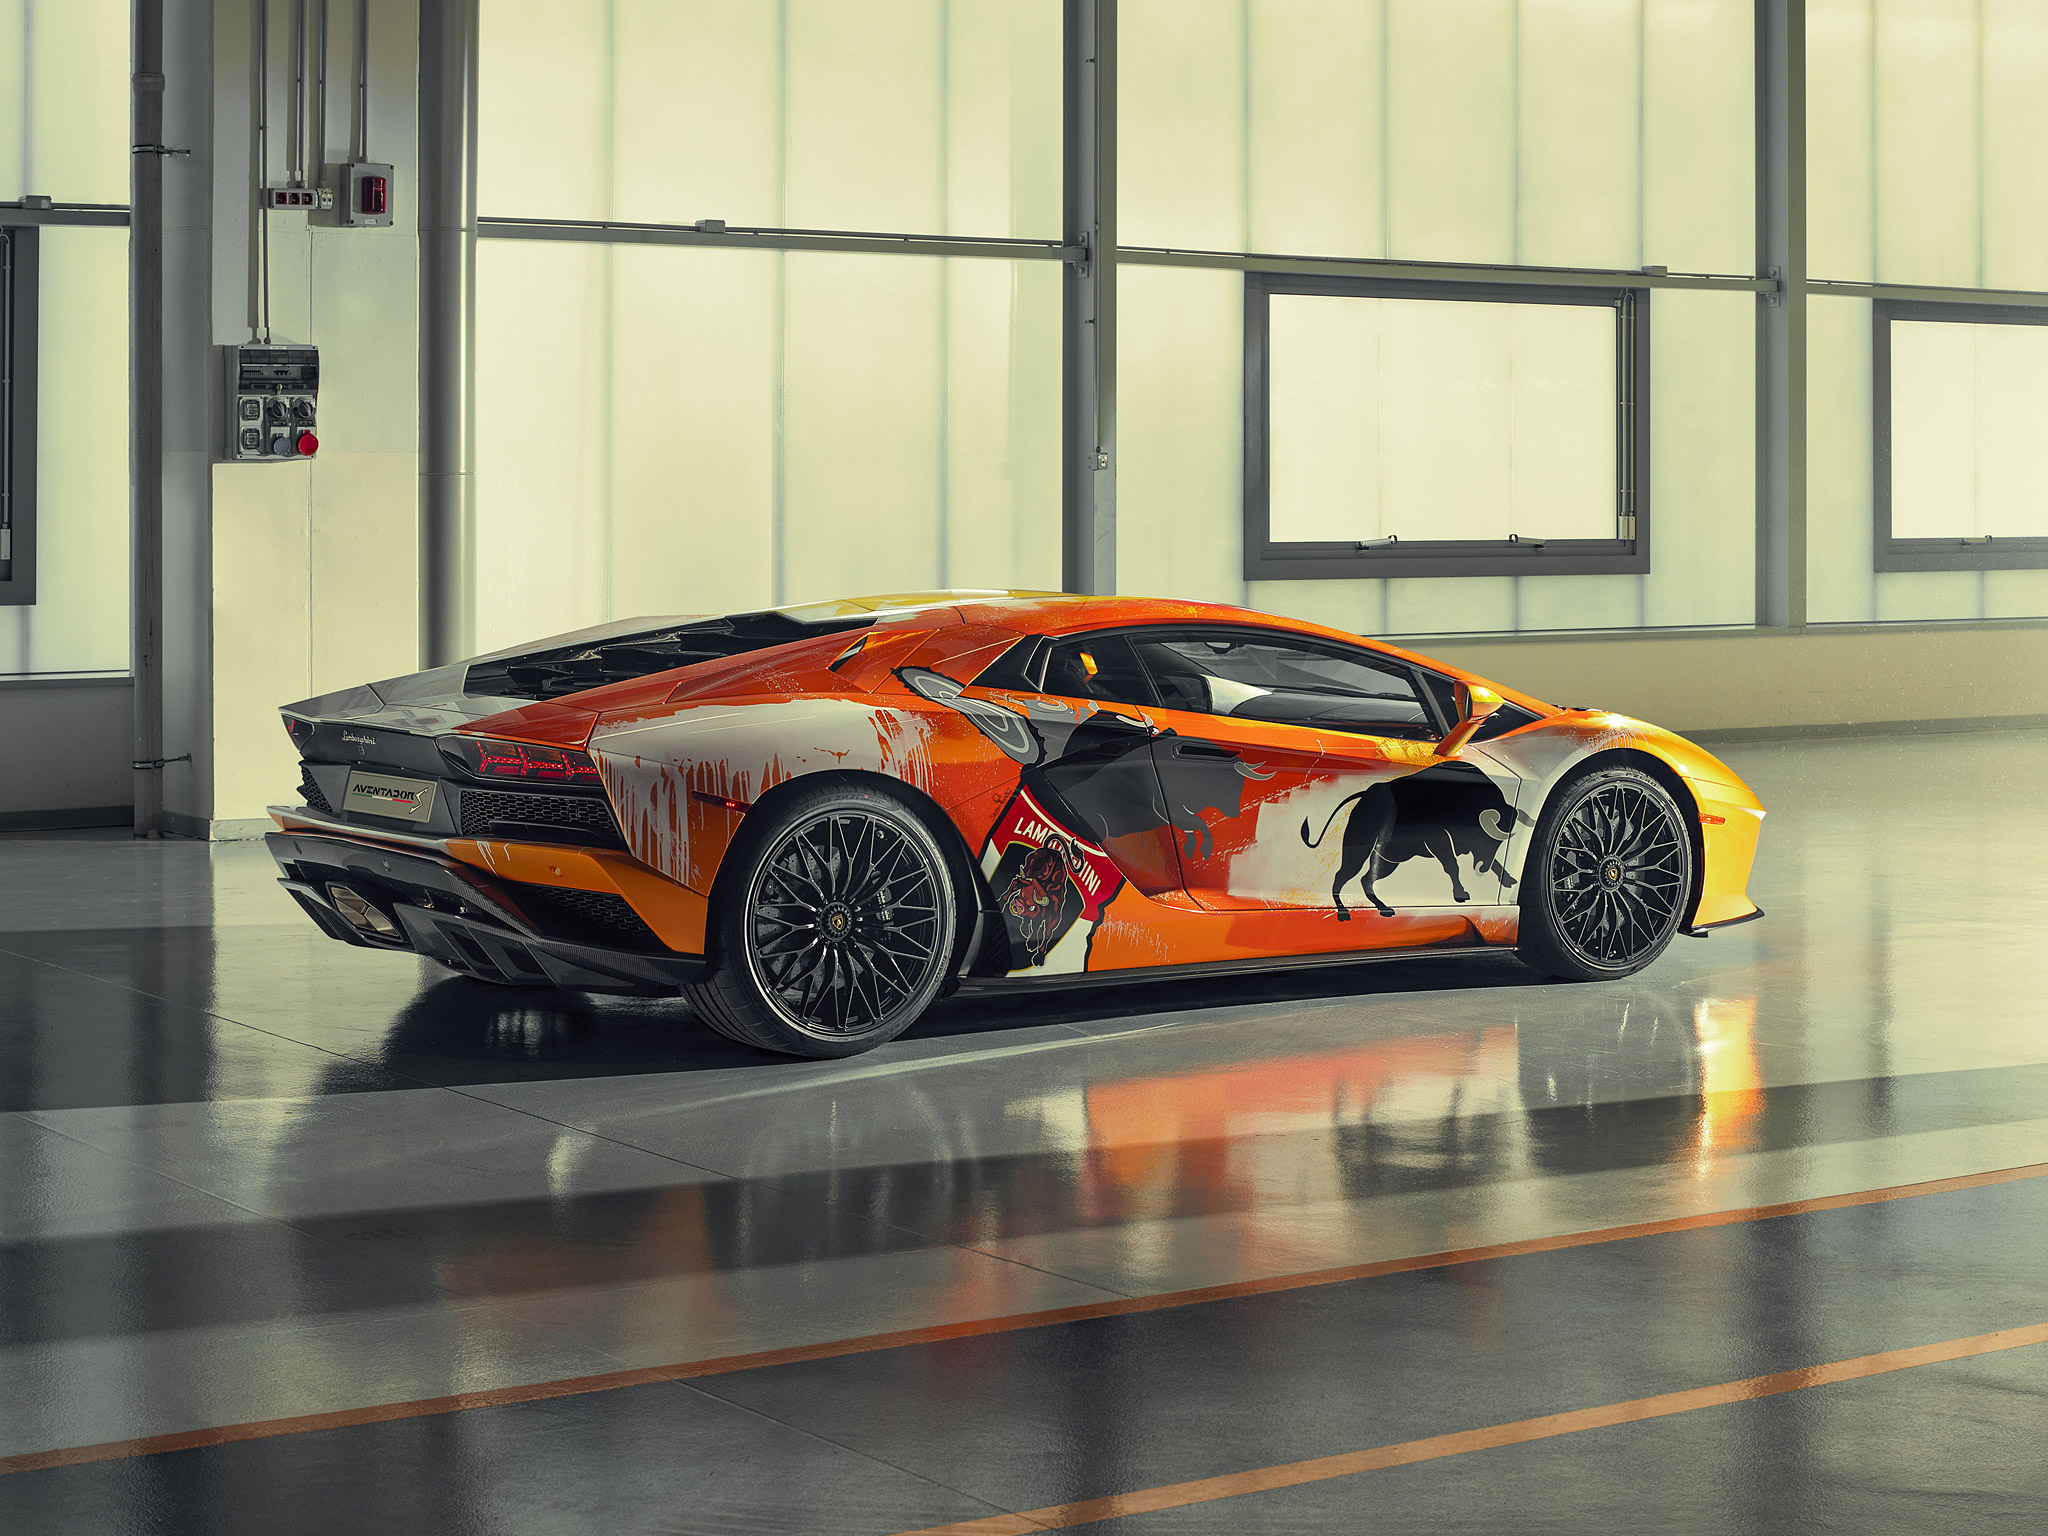  2019 Lamborghini Aventador S by Skyler Grey Wallpaper.